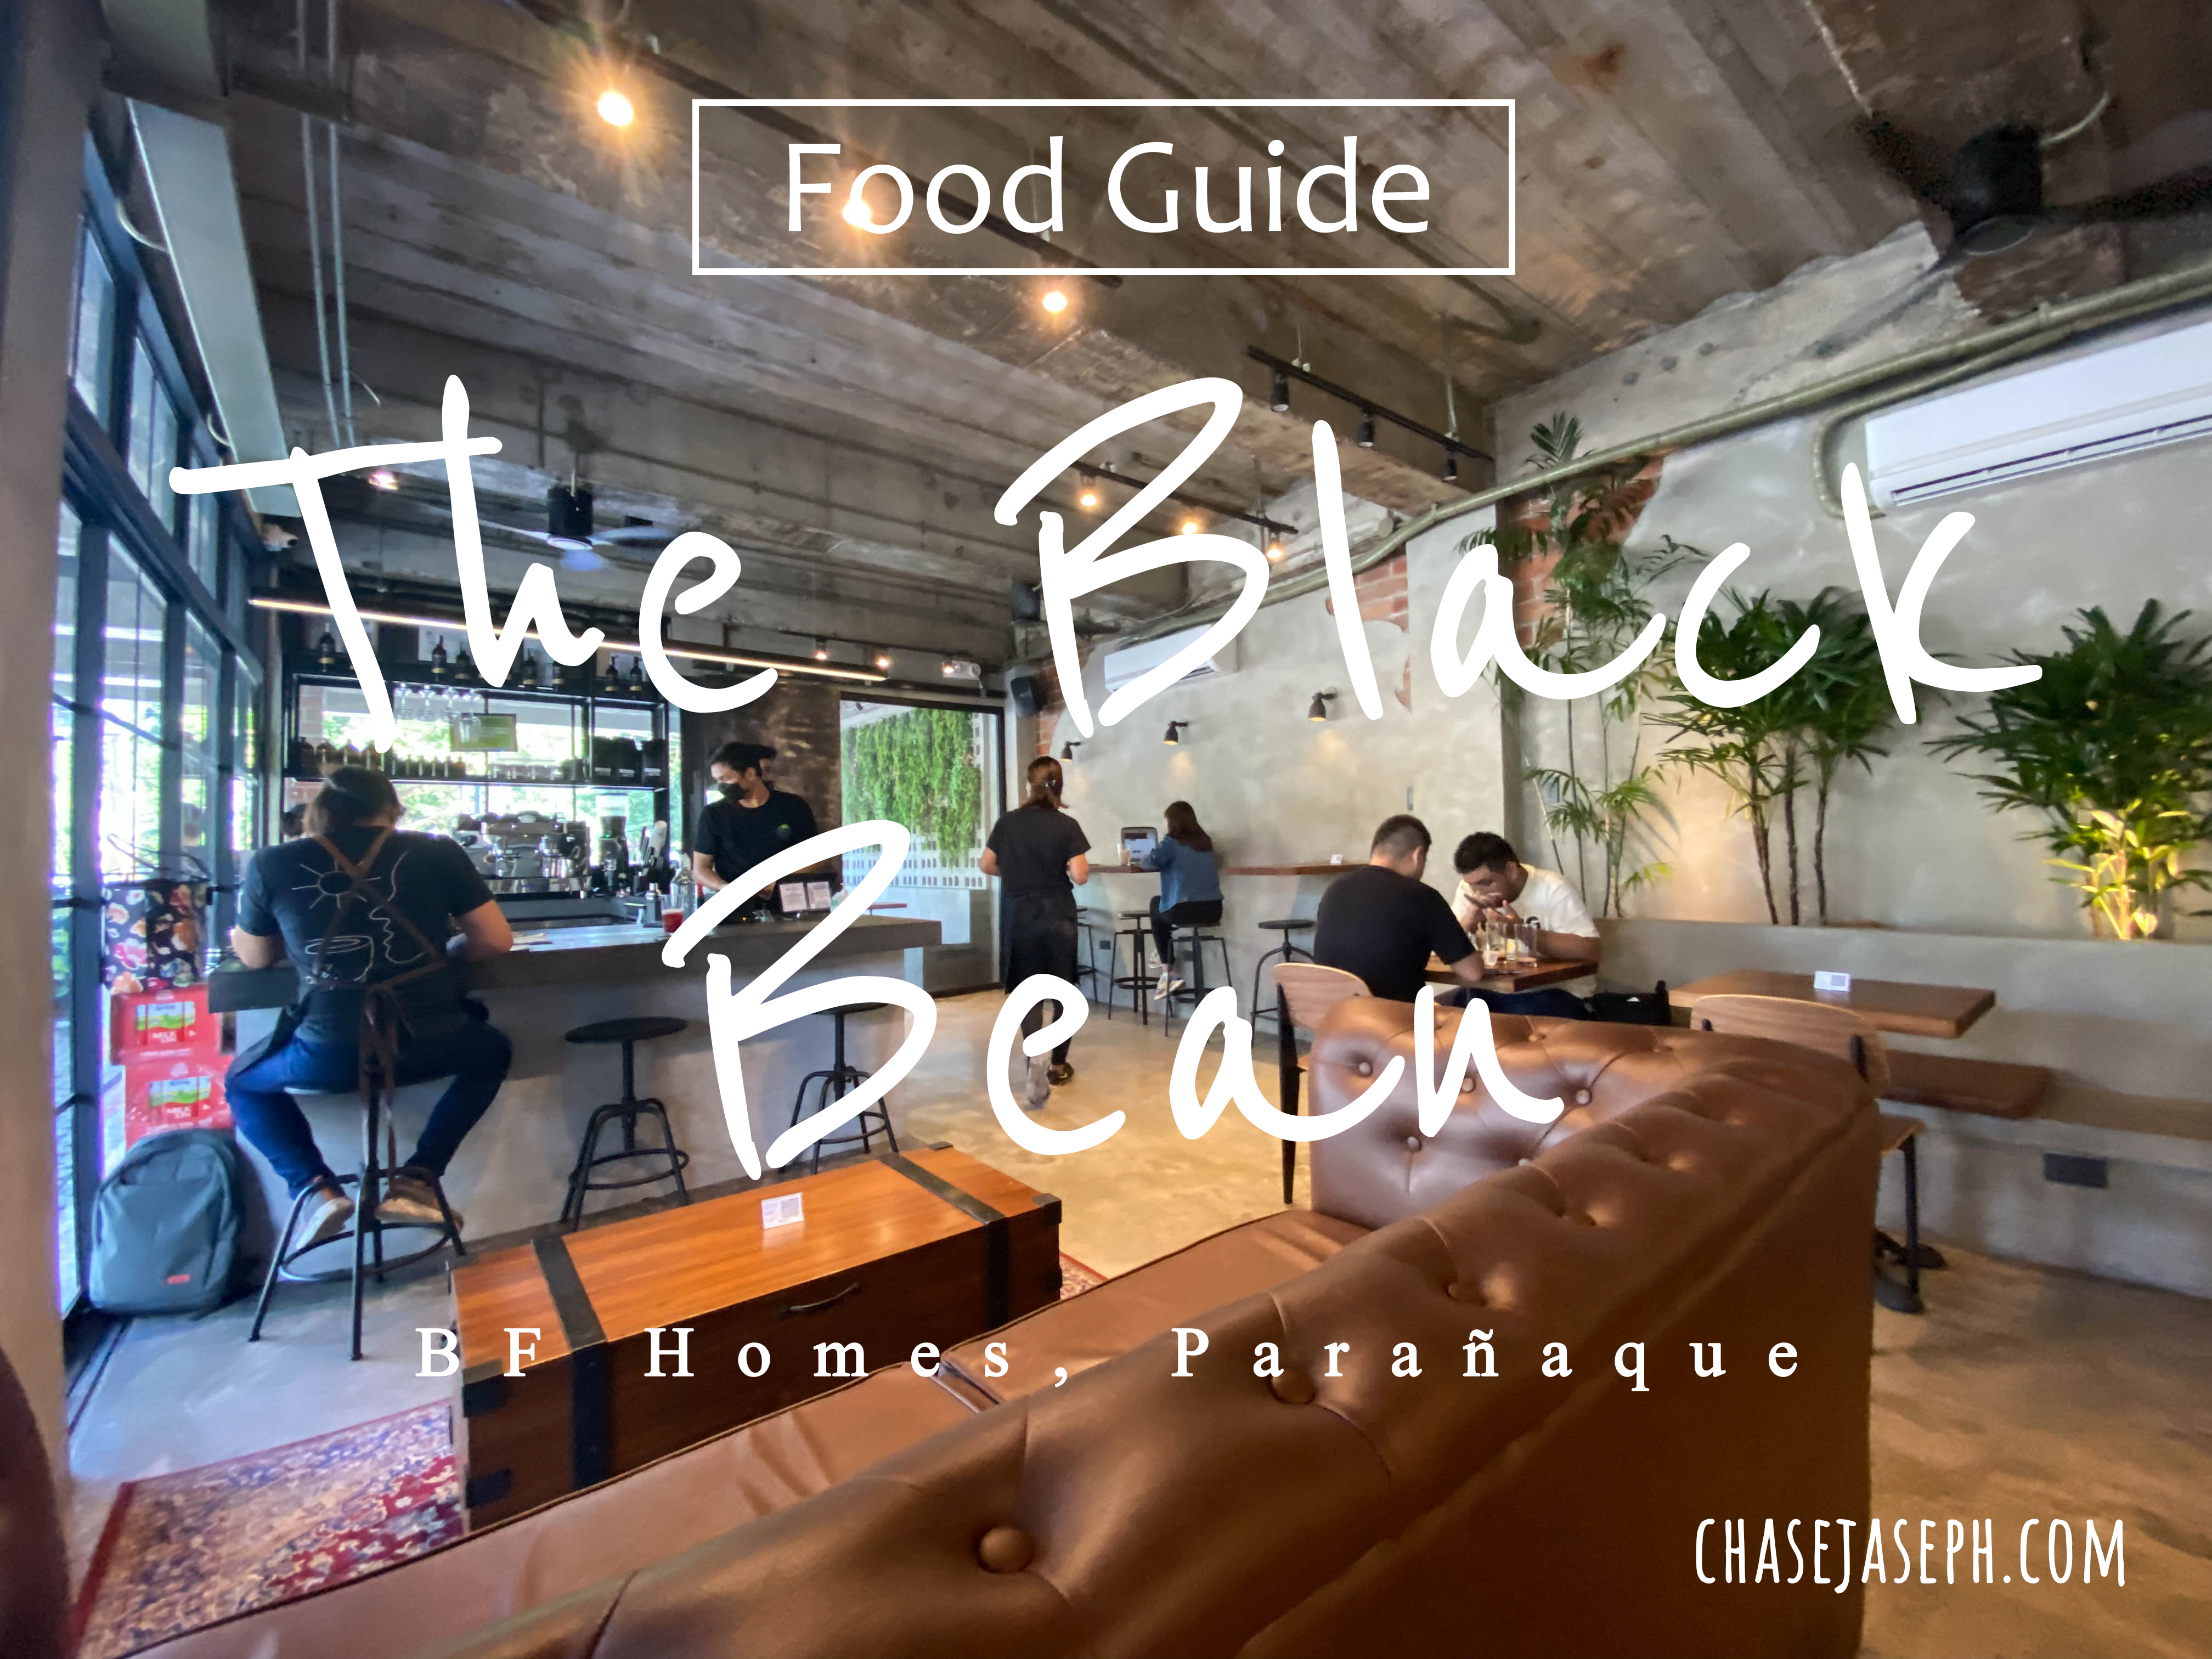 The Black Bean - BF Homes, Parañaque City (Food Guide)